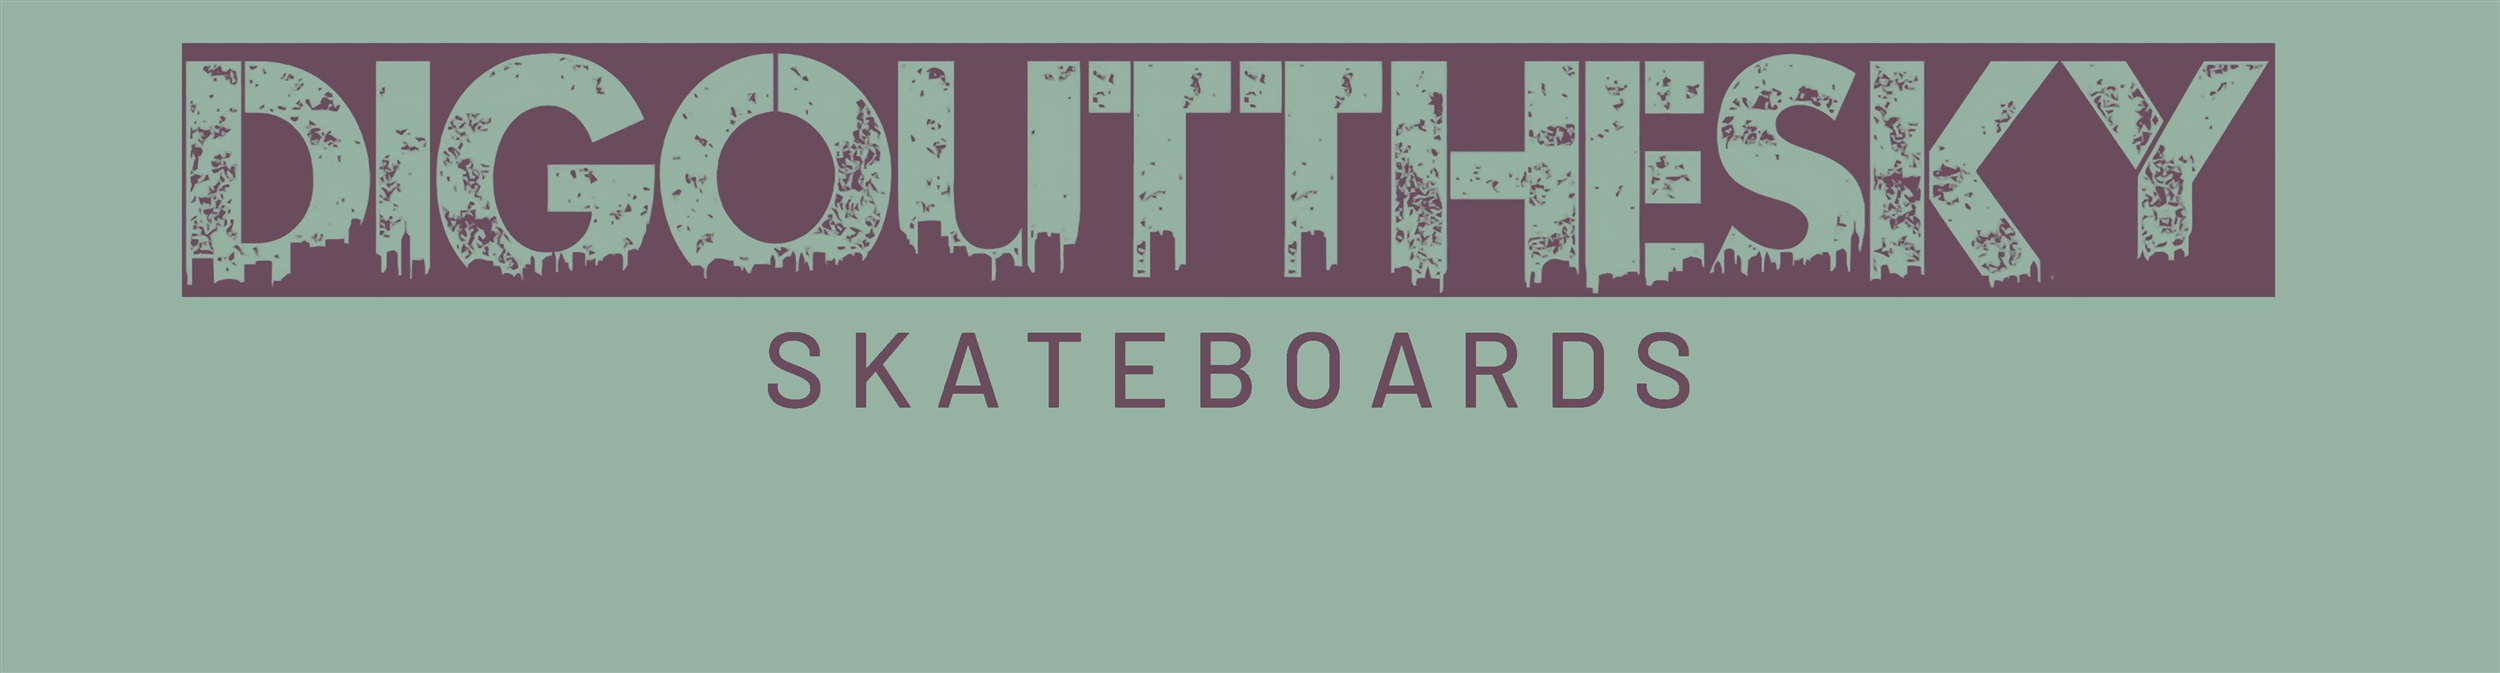 DigOutTheSky Skateboards